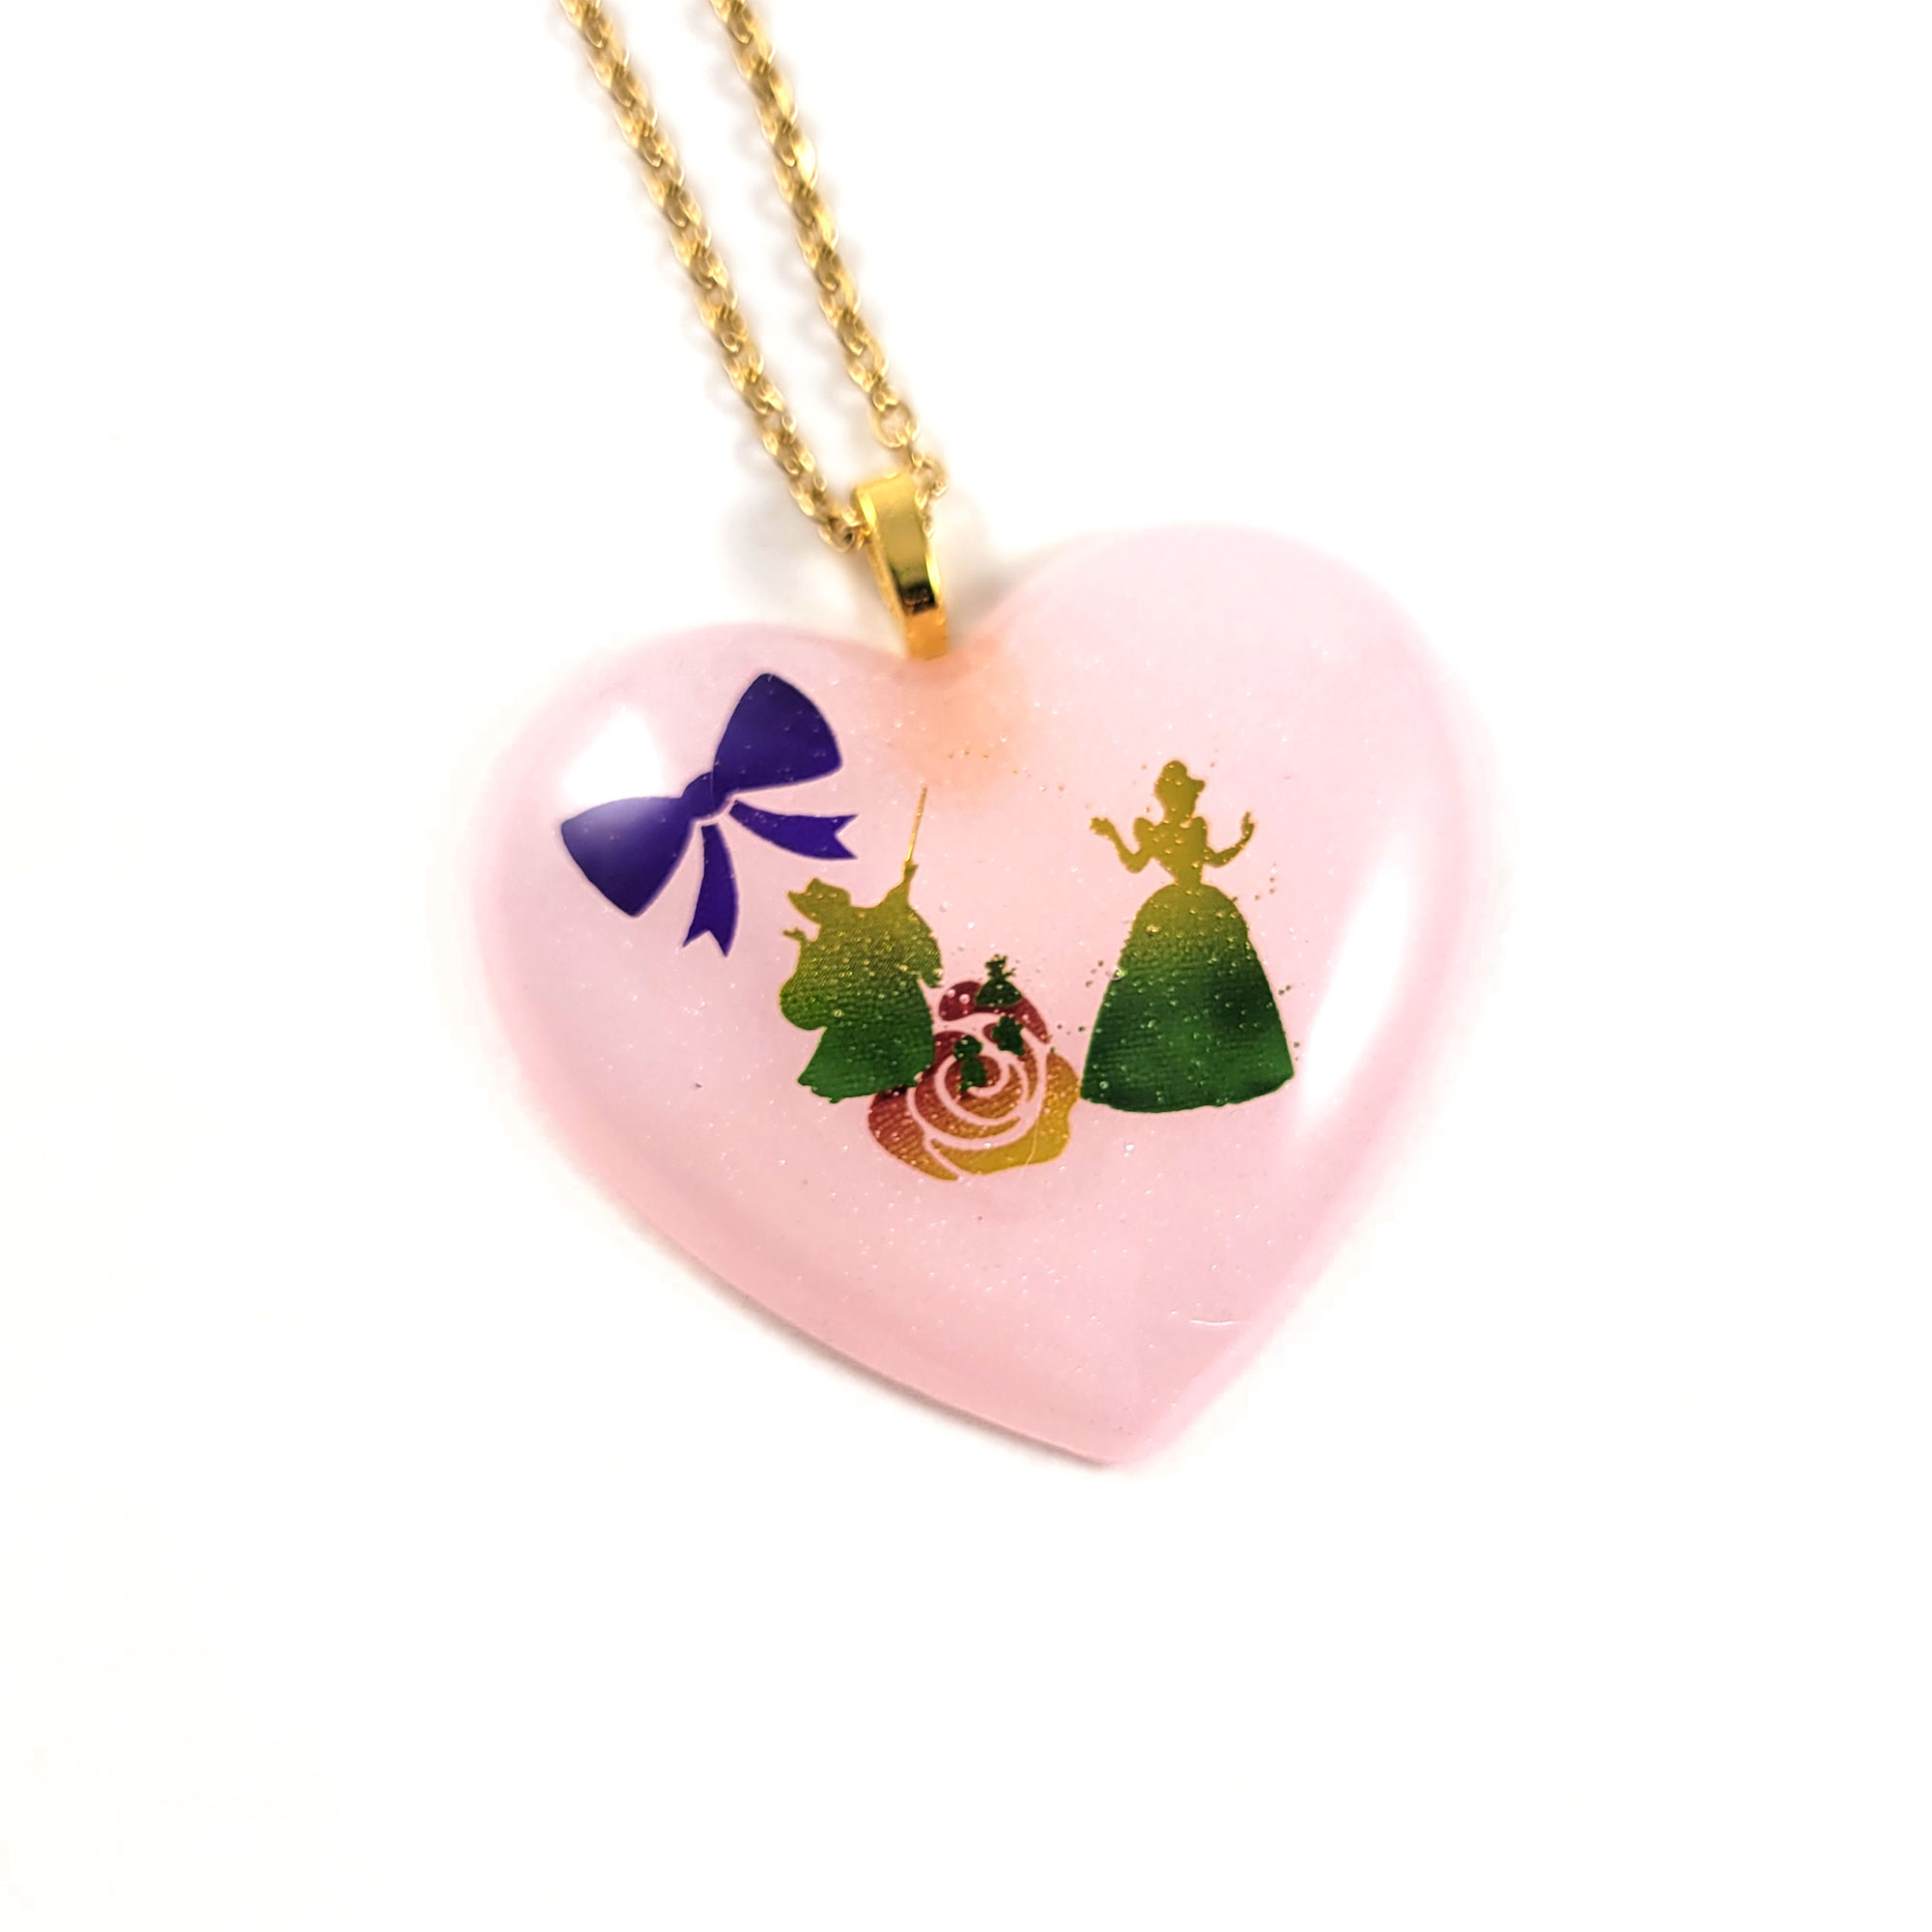 Fairy Tale Heart Necklace by Wilde Designs